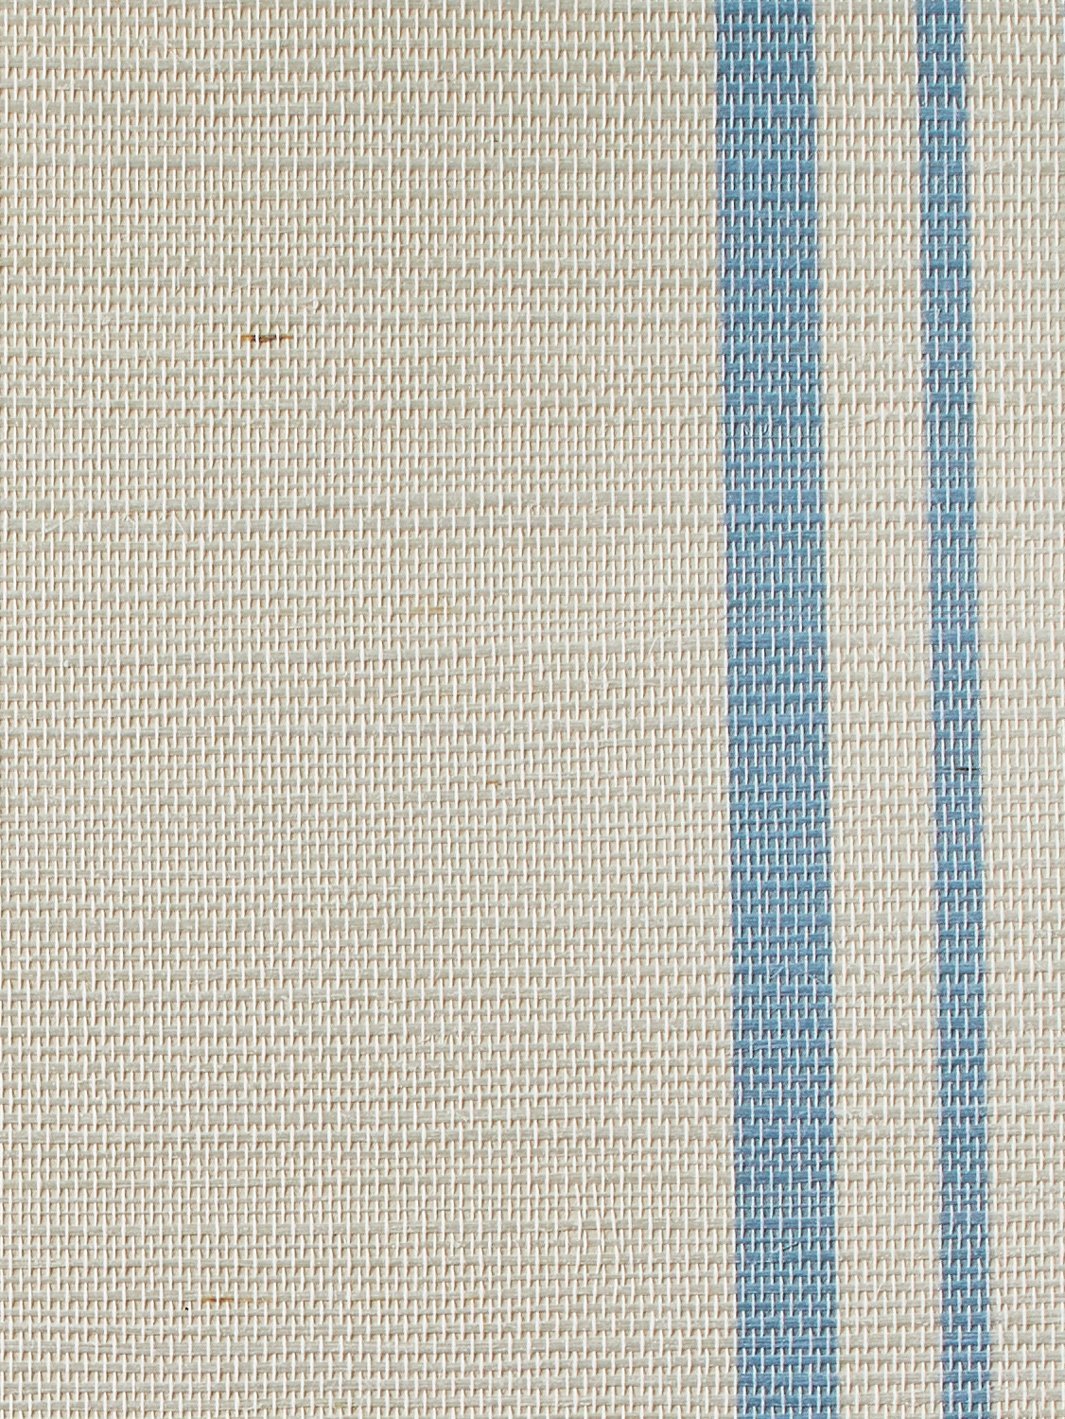 'Yorkshire Stripe' Grasscloth' Wallpaper by Wallshoppe - Cornflower